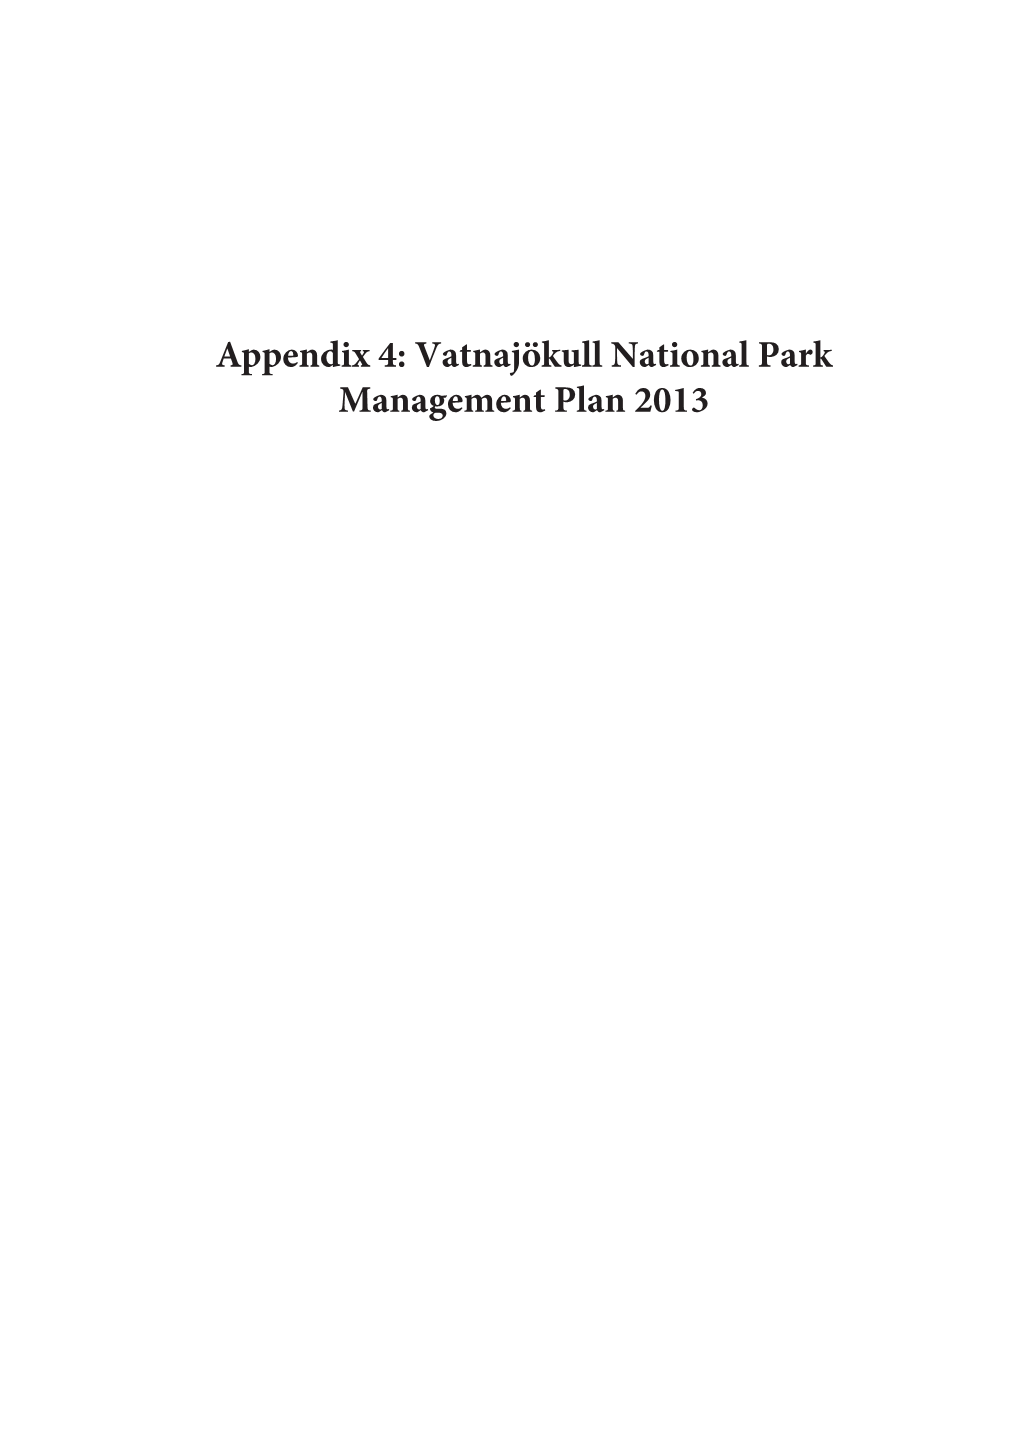 Appendix 4: Vatnajökull National Park Management Plan 2013 Contents